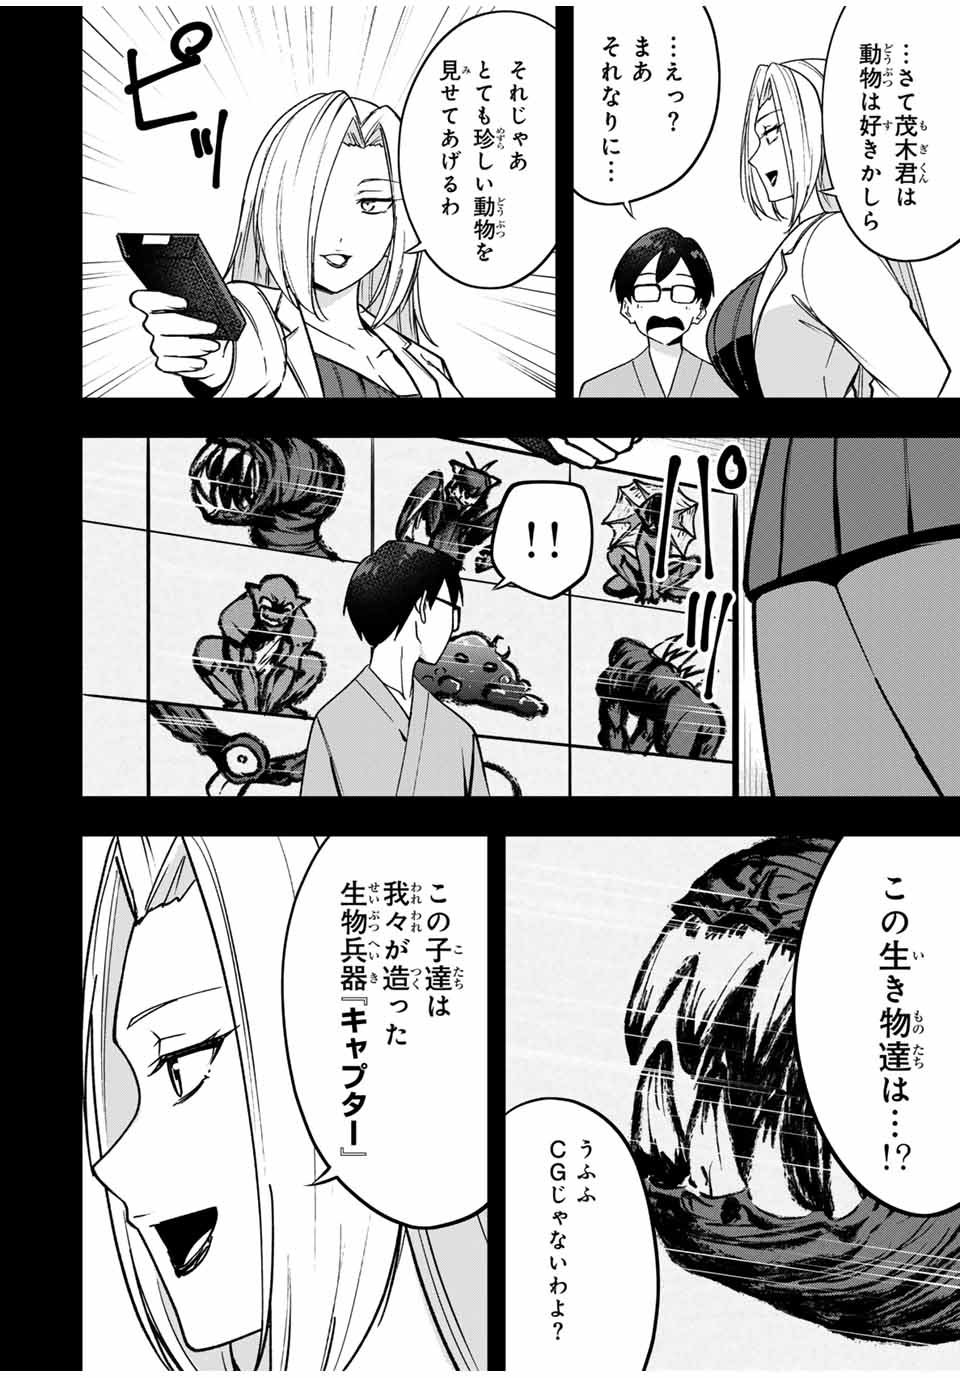 Heroine wa xx Okasegitai - Chapter 9 - Page 18